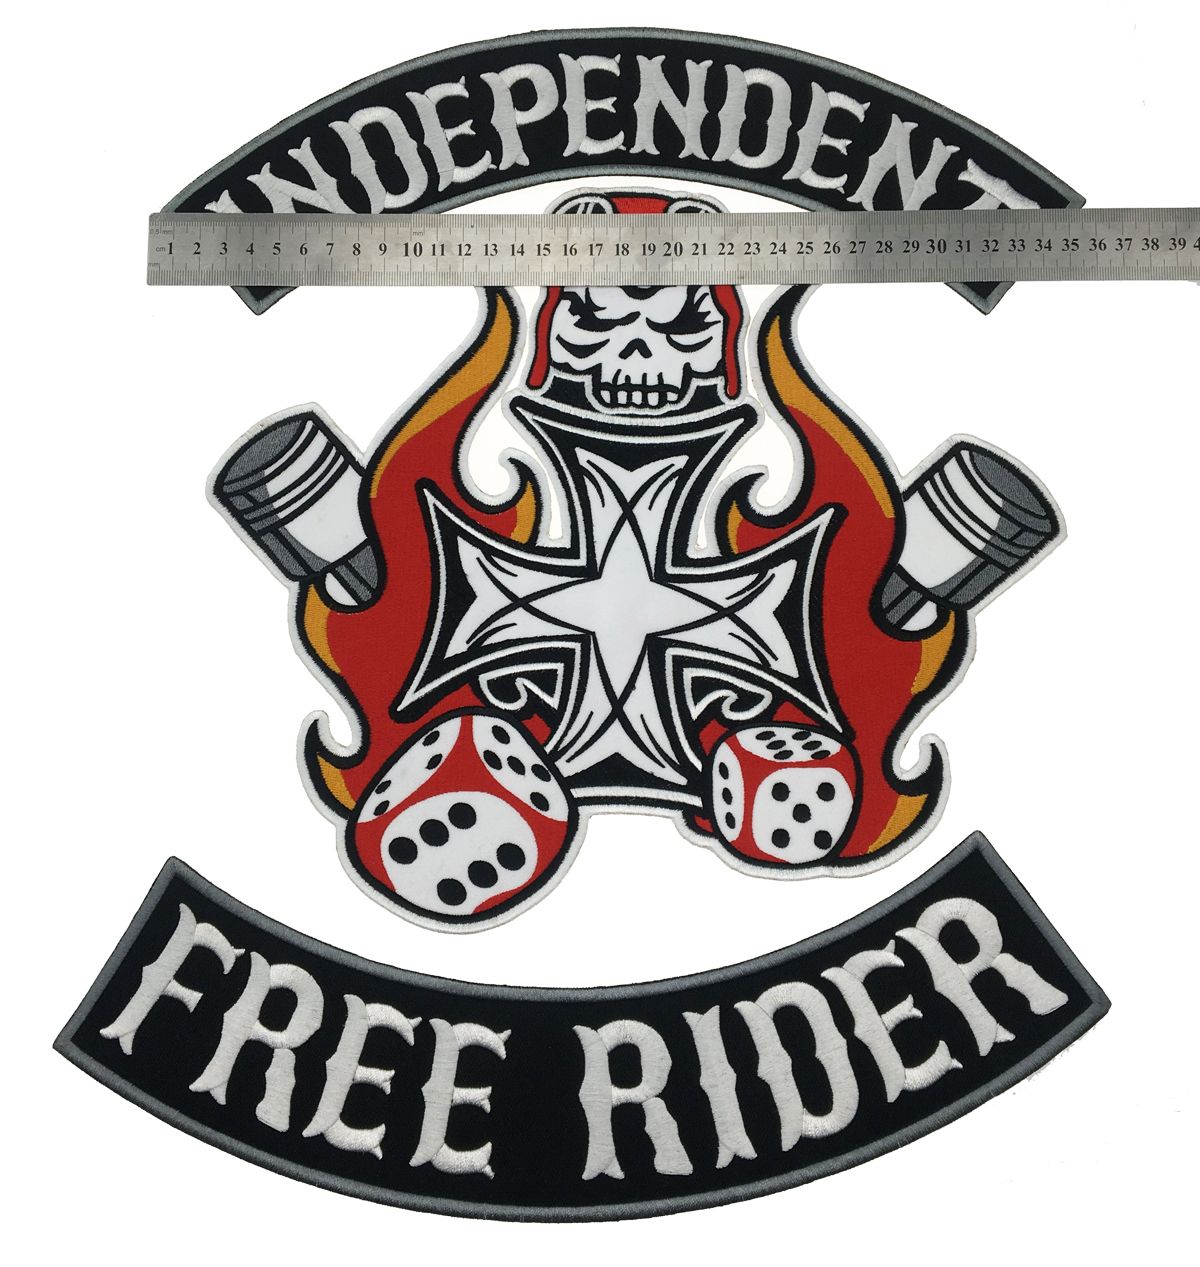 Free Rider 12" Rocker banner LIVE TO RIDE best quality Sew-On biker patch